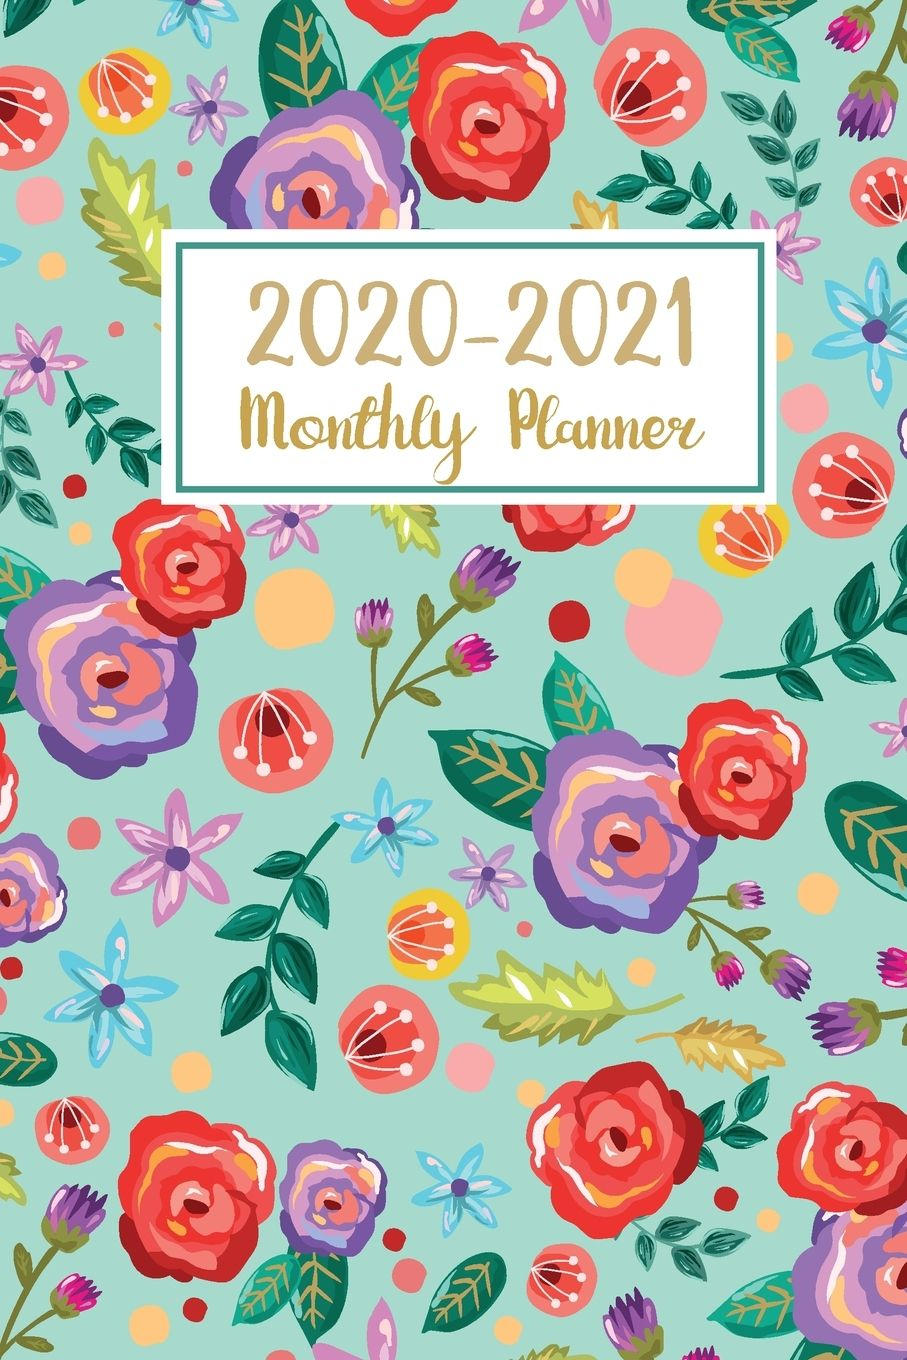 Plan Ahead 2 Year Calendar 2020 2021 Monthly Planner: 2020